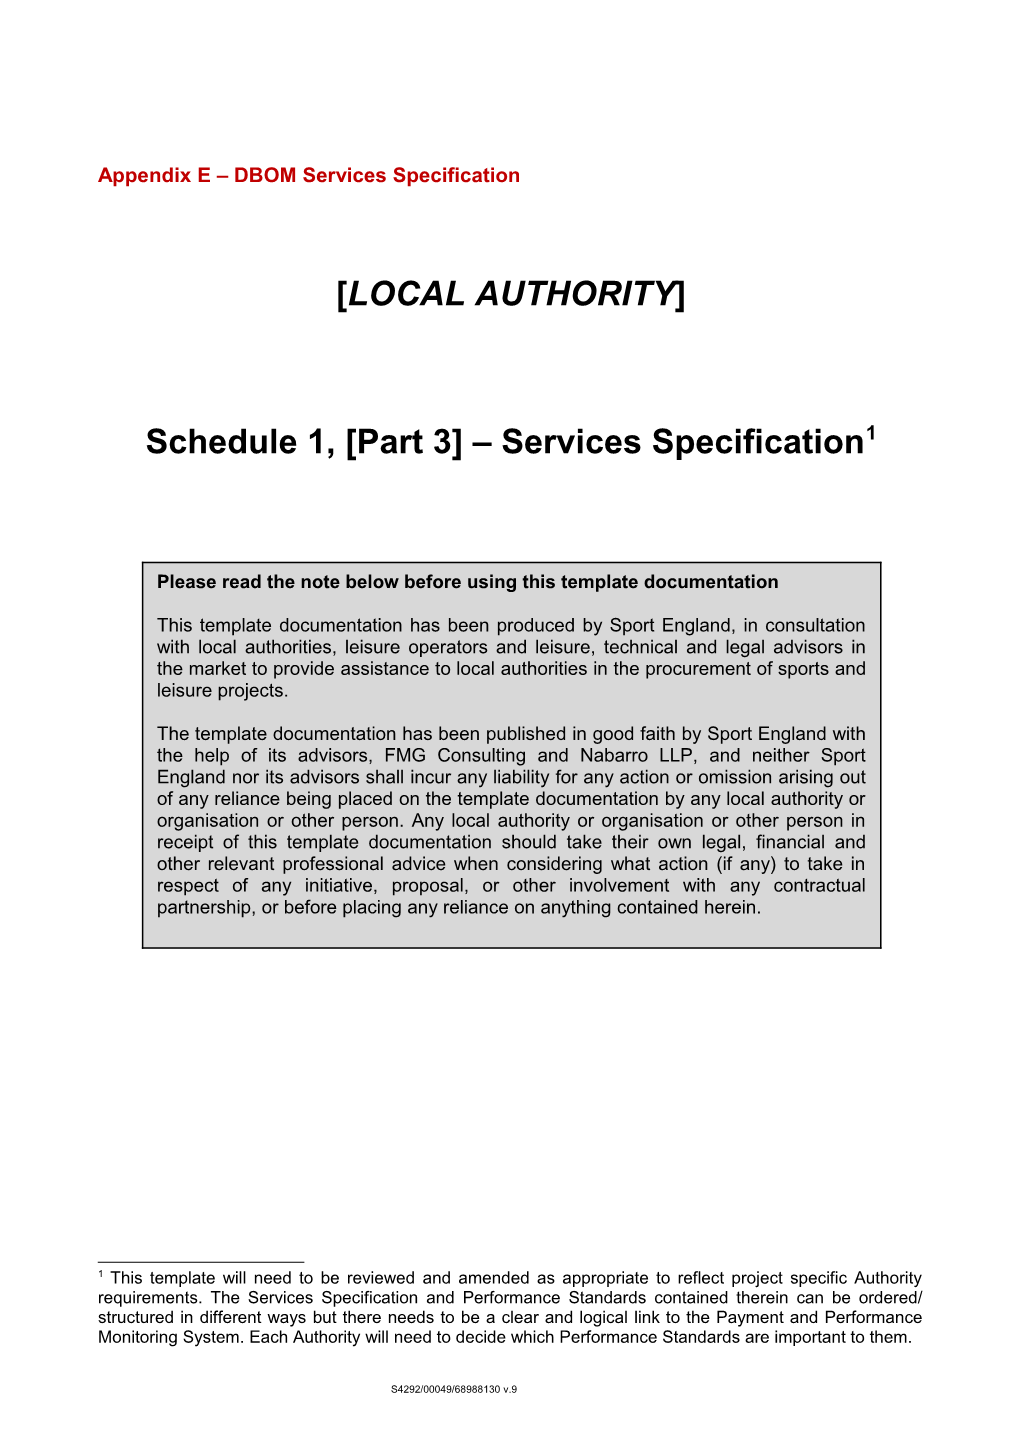 Appendix E DBOM Services Specification